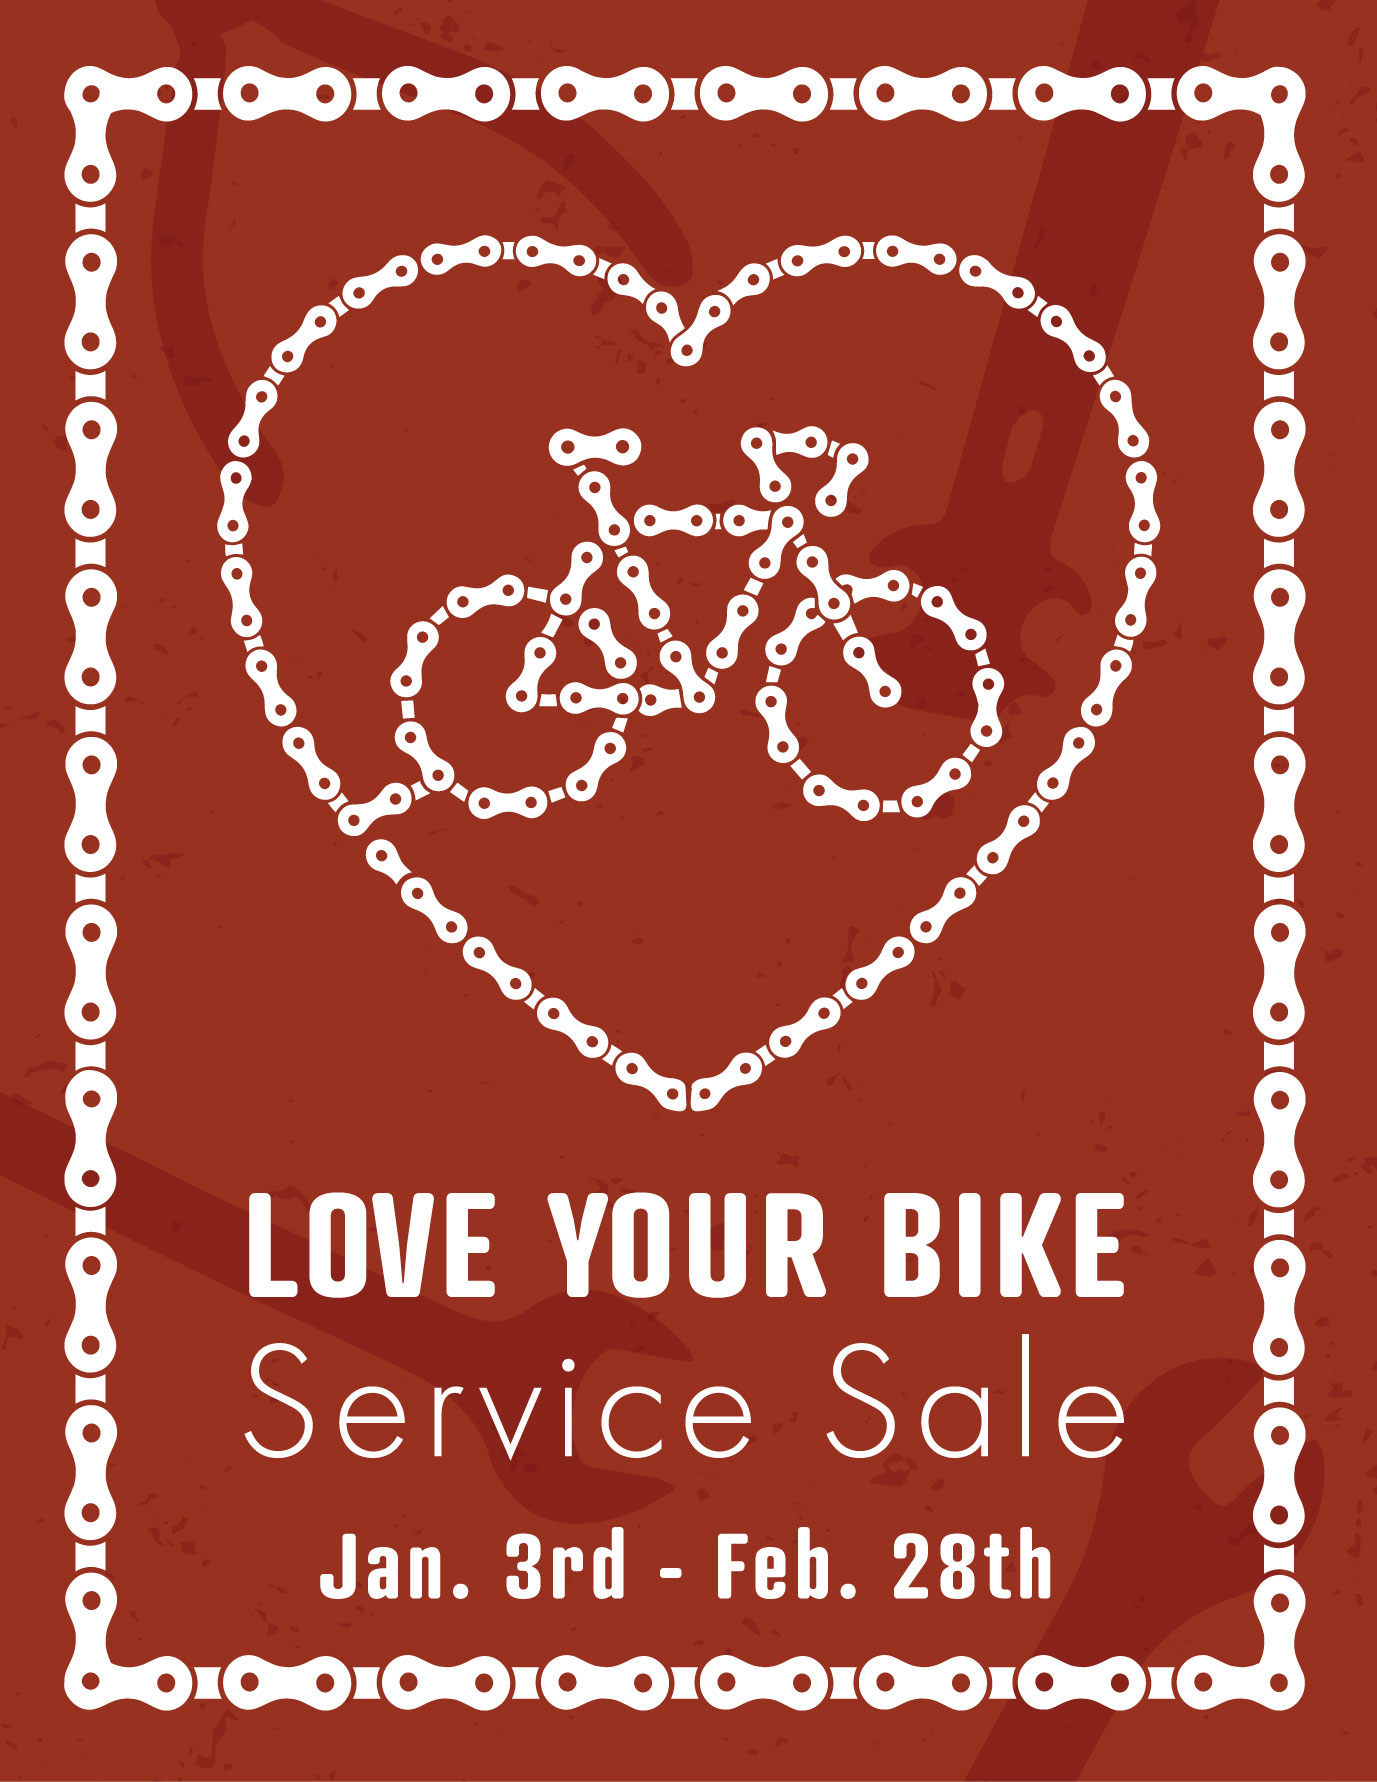 Love your bike Wheel & Sprocket service sale. January 3rd - February 28th